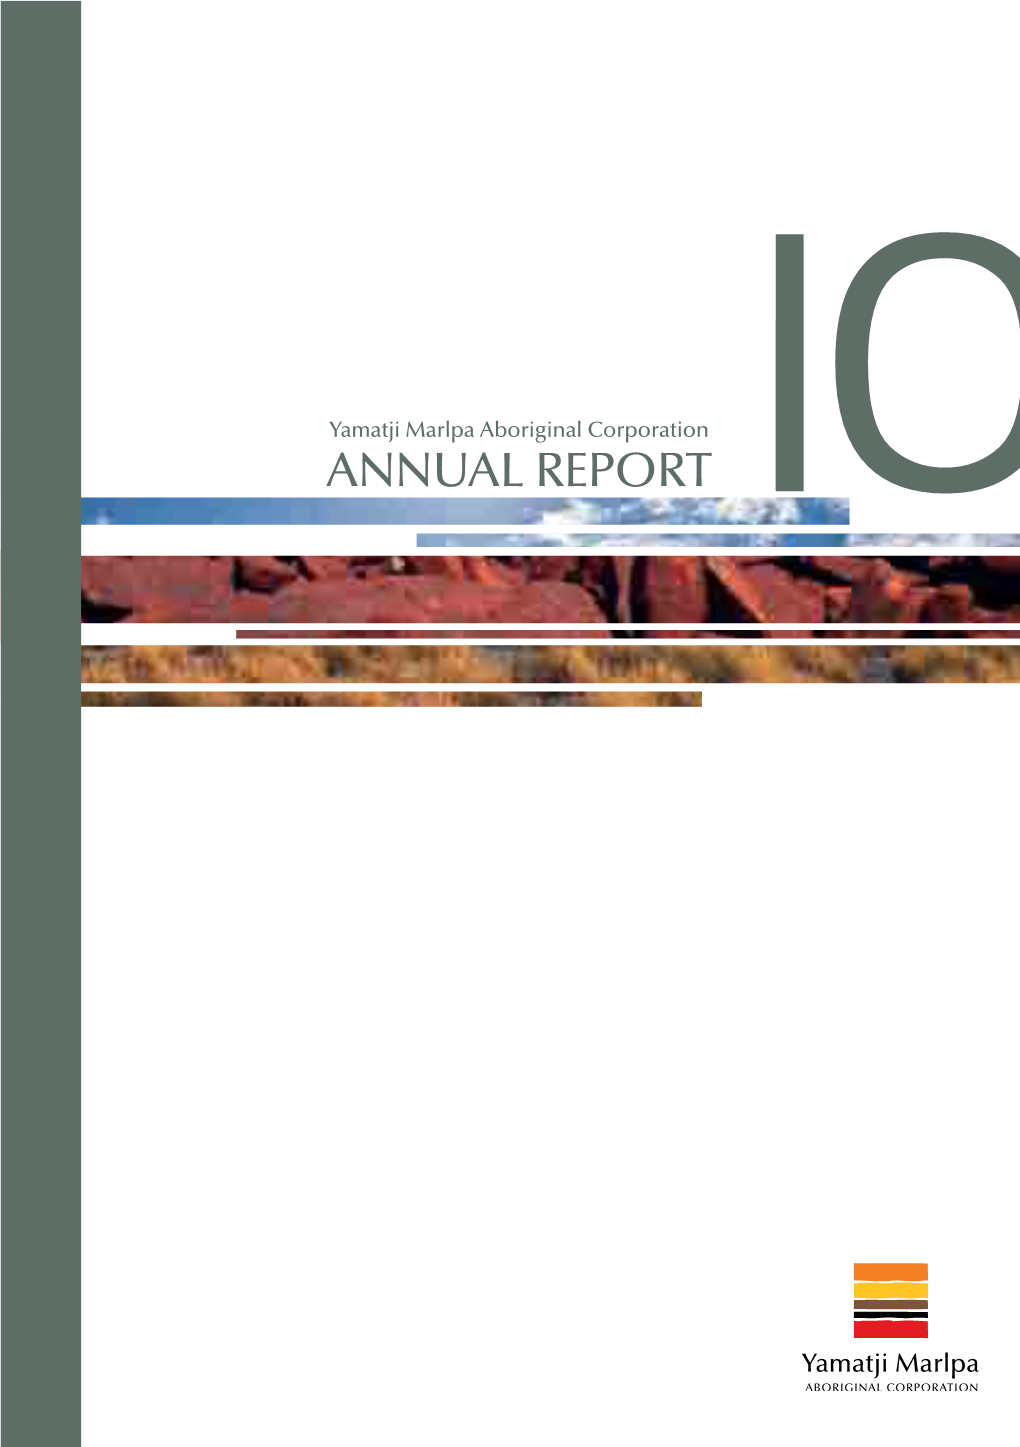 Annual Report 2010